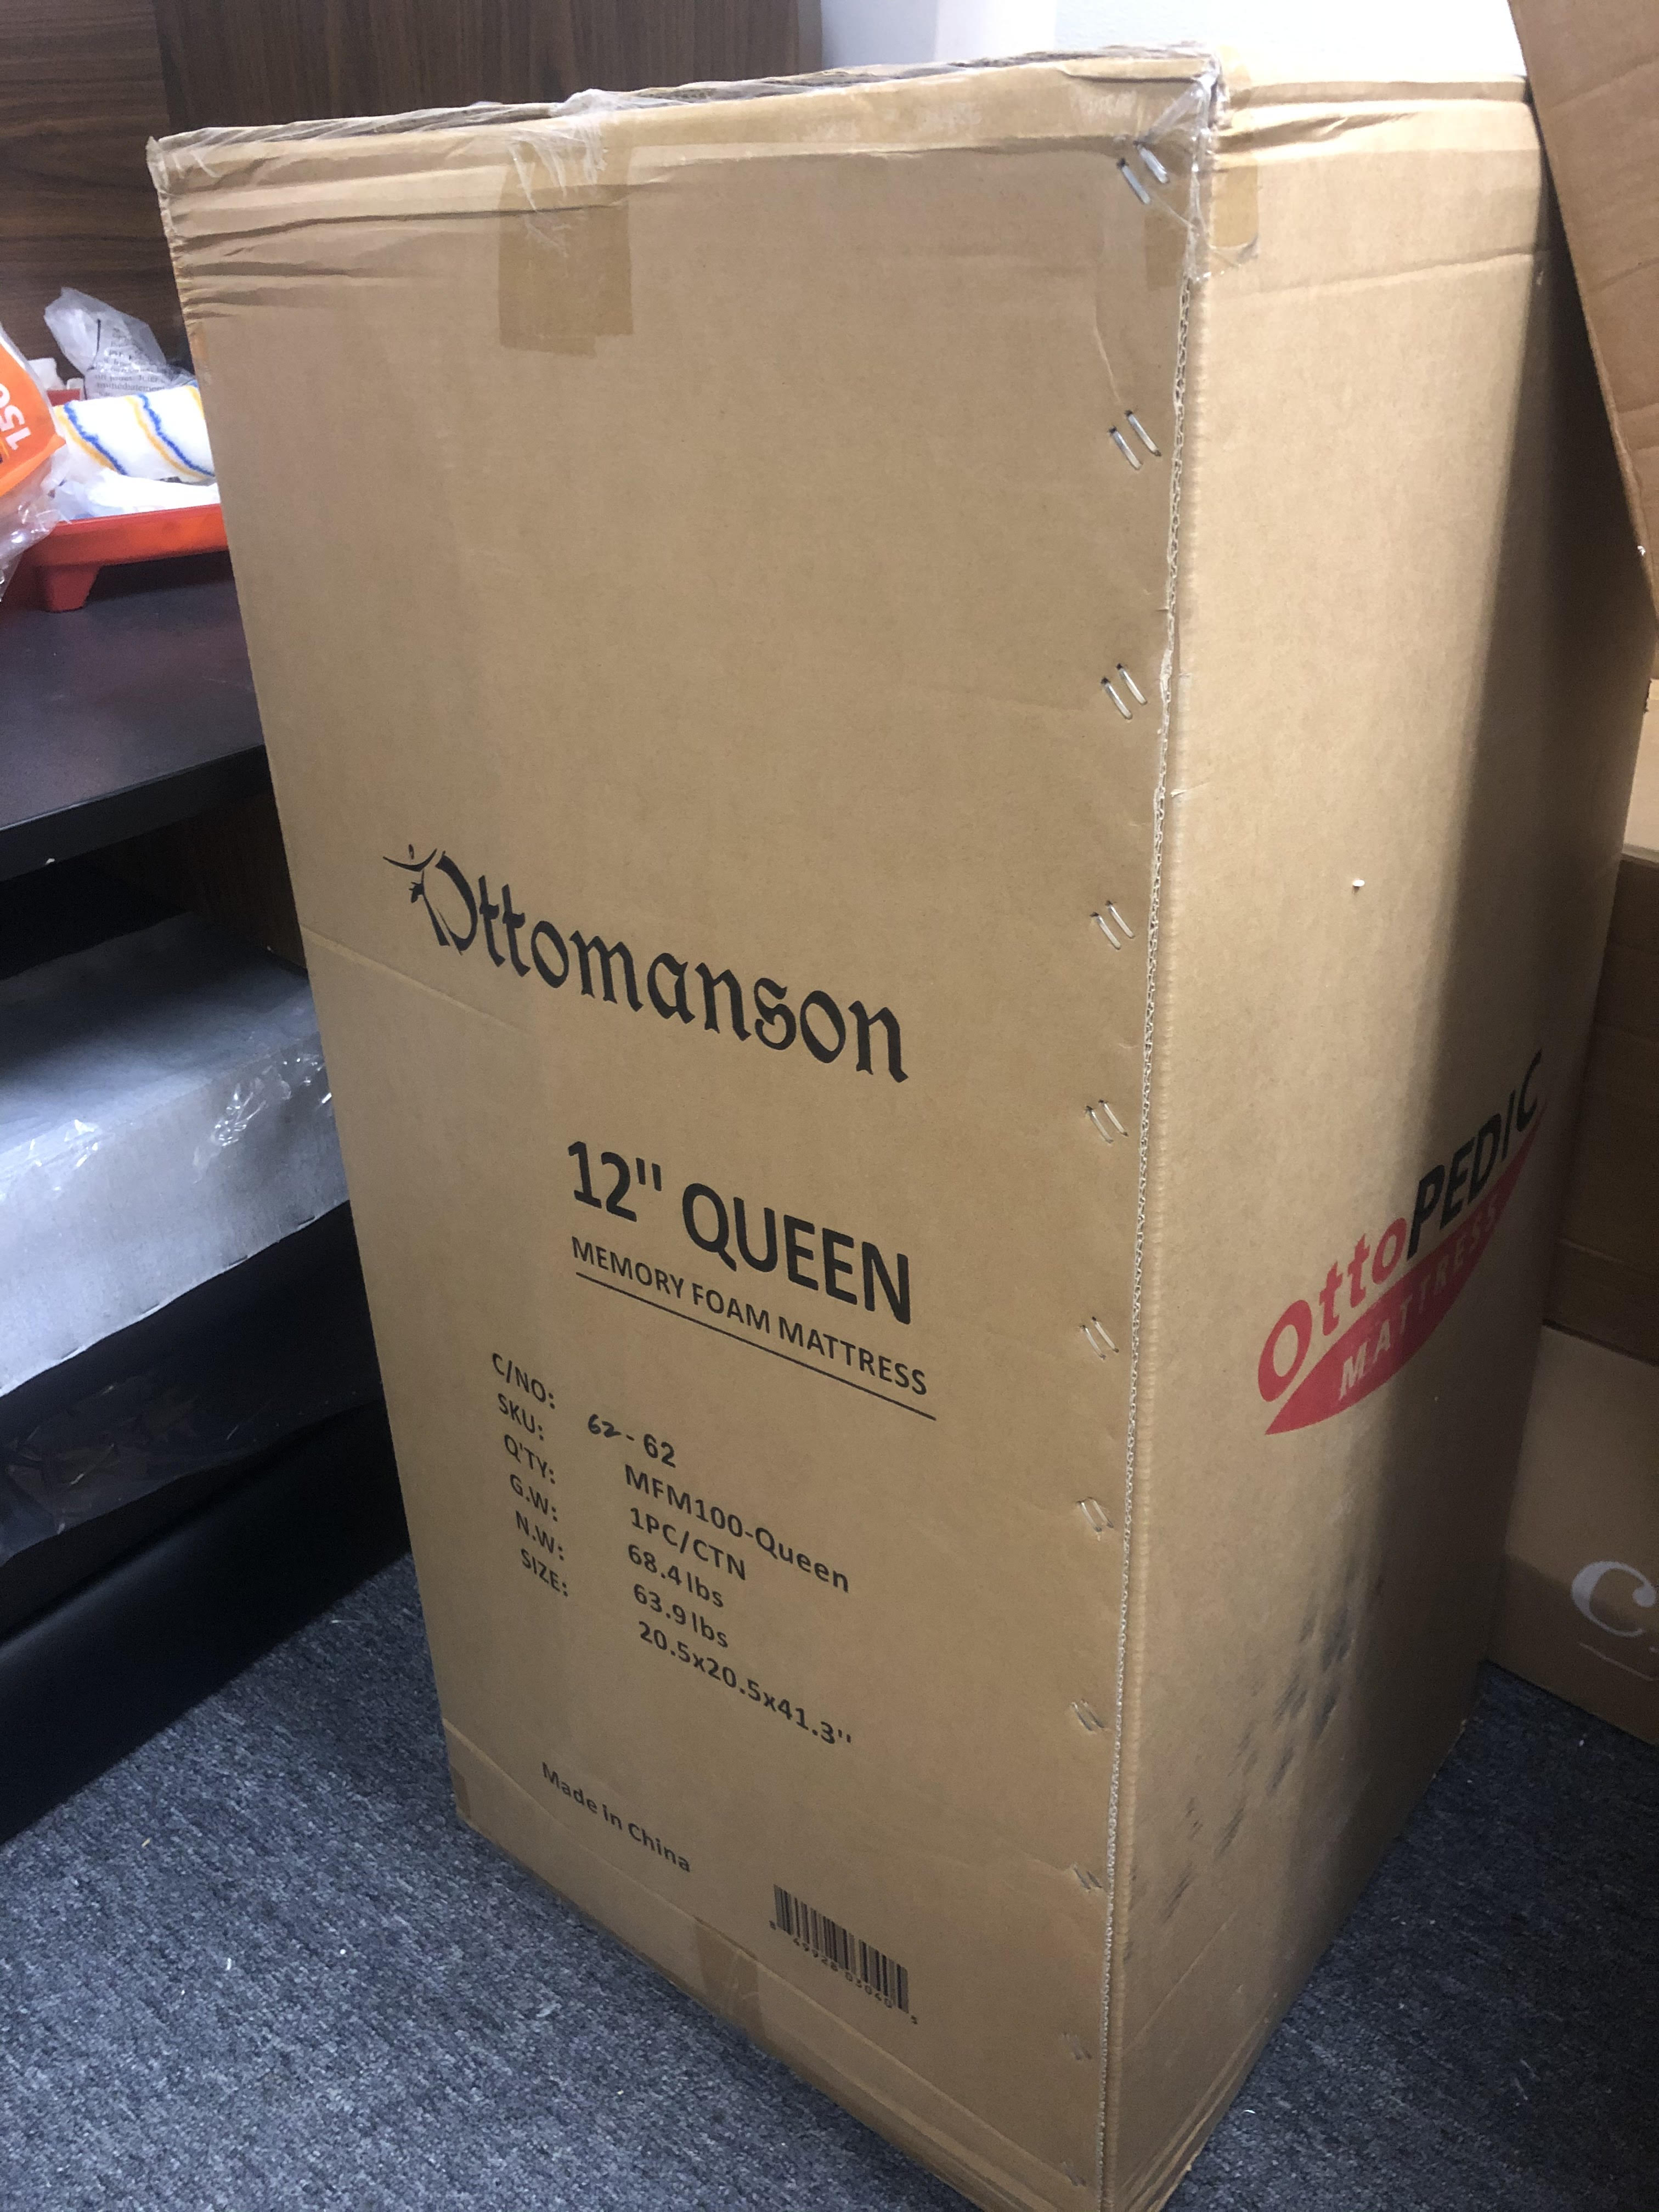 queen memory foam mattress in a box